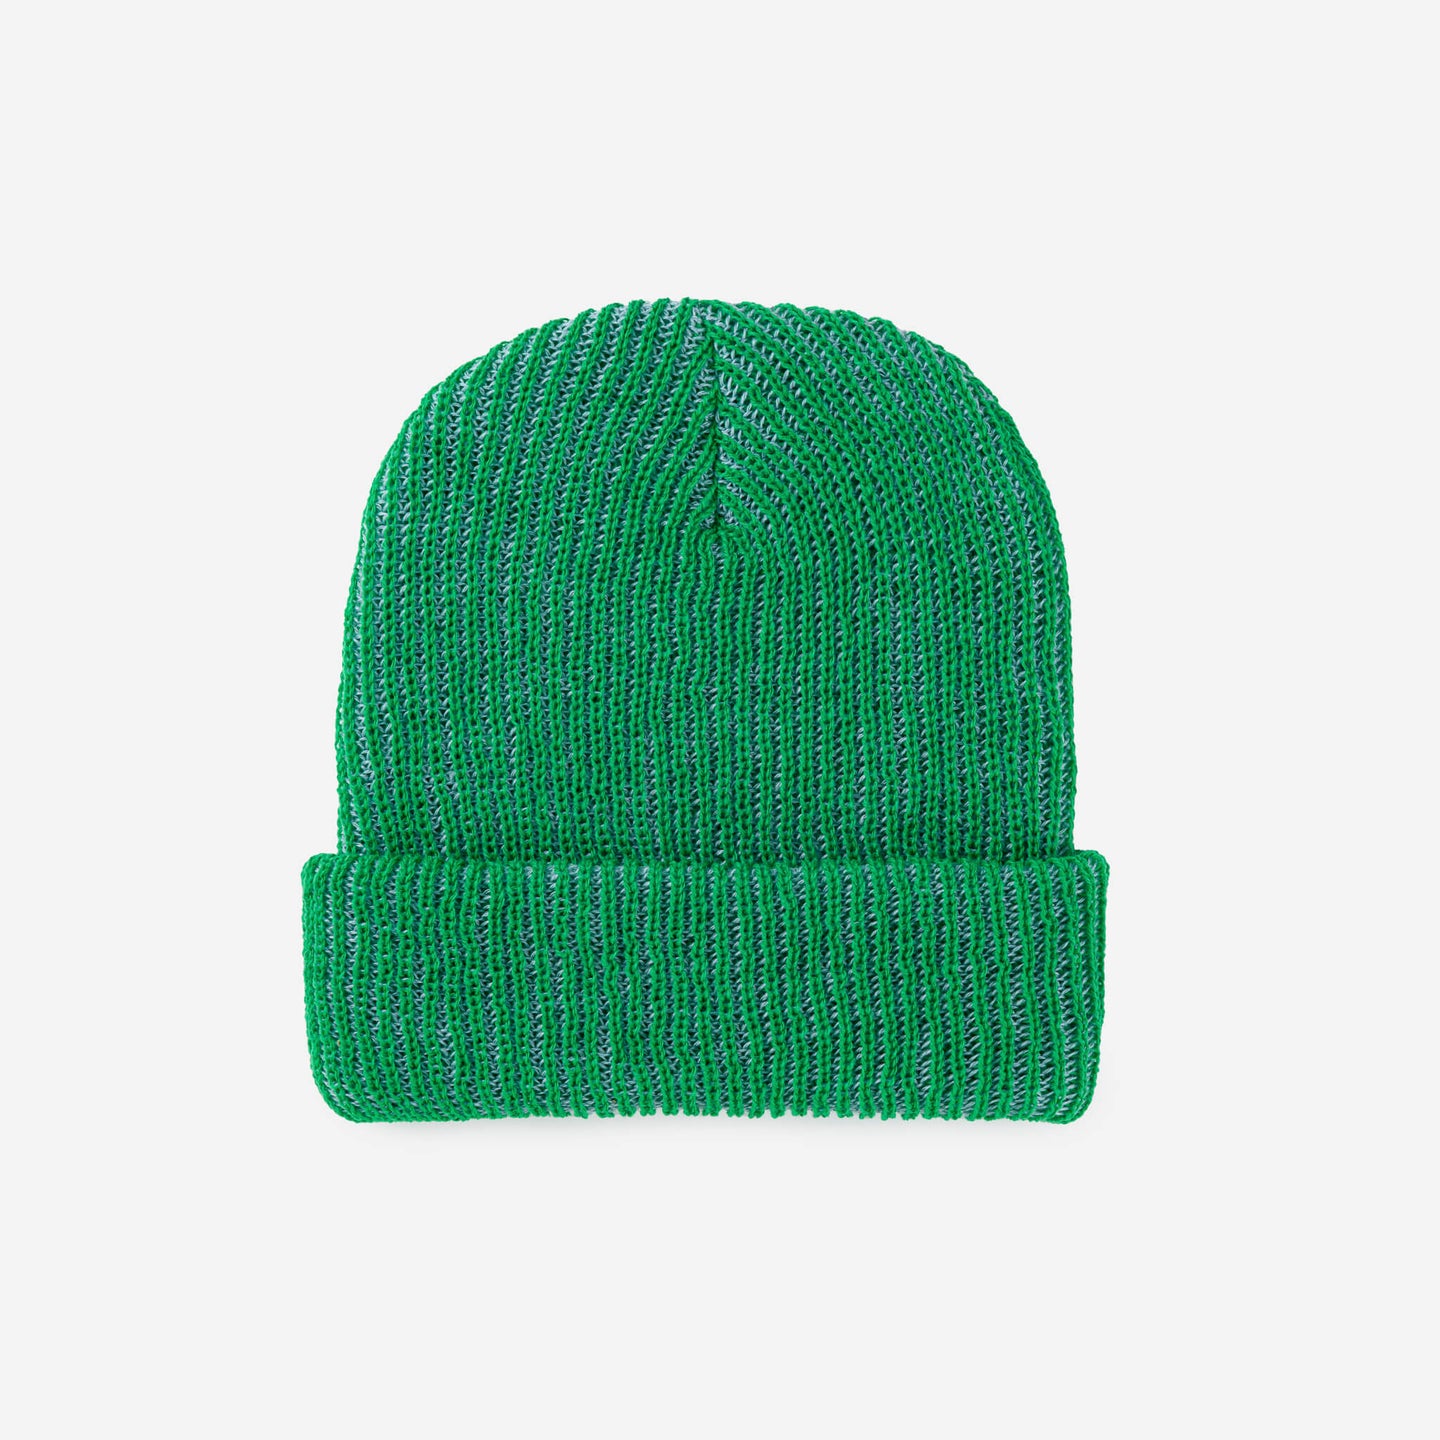 Simple Rib Knit Beanie Hat Colorful Soft 